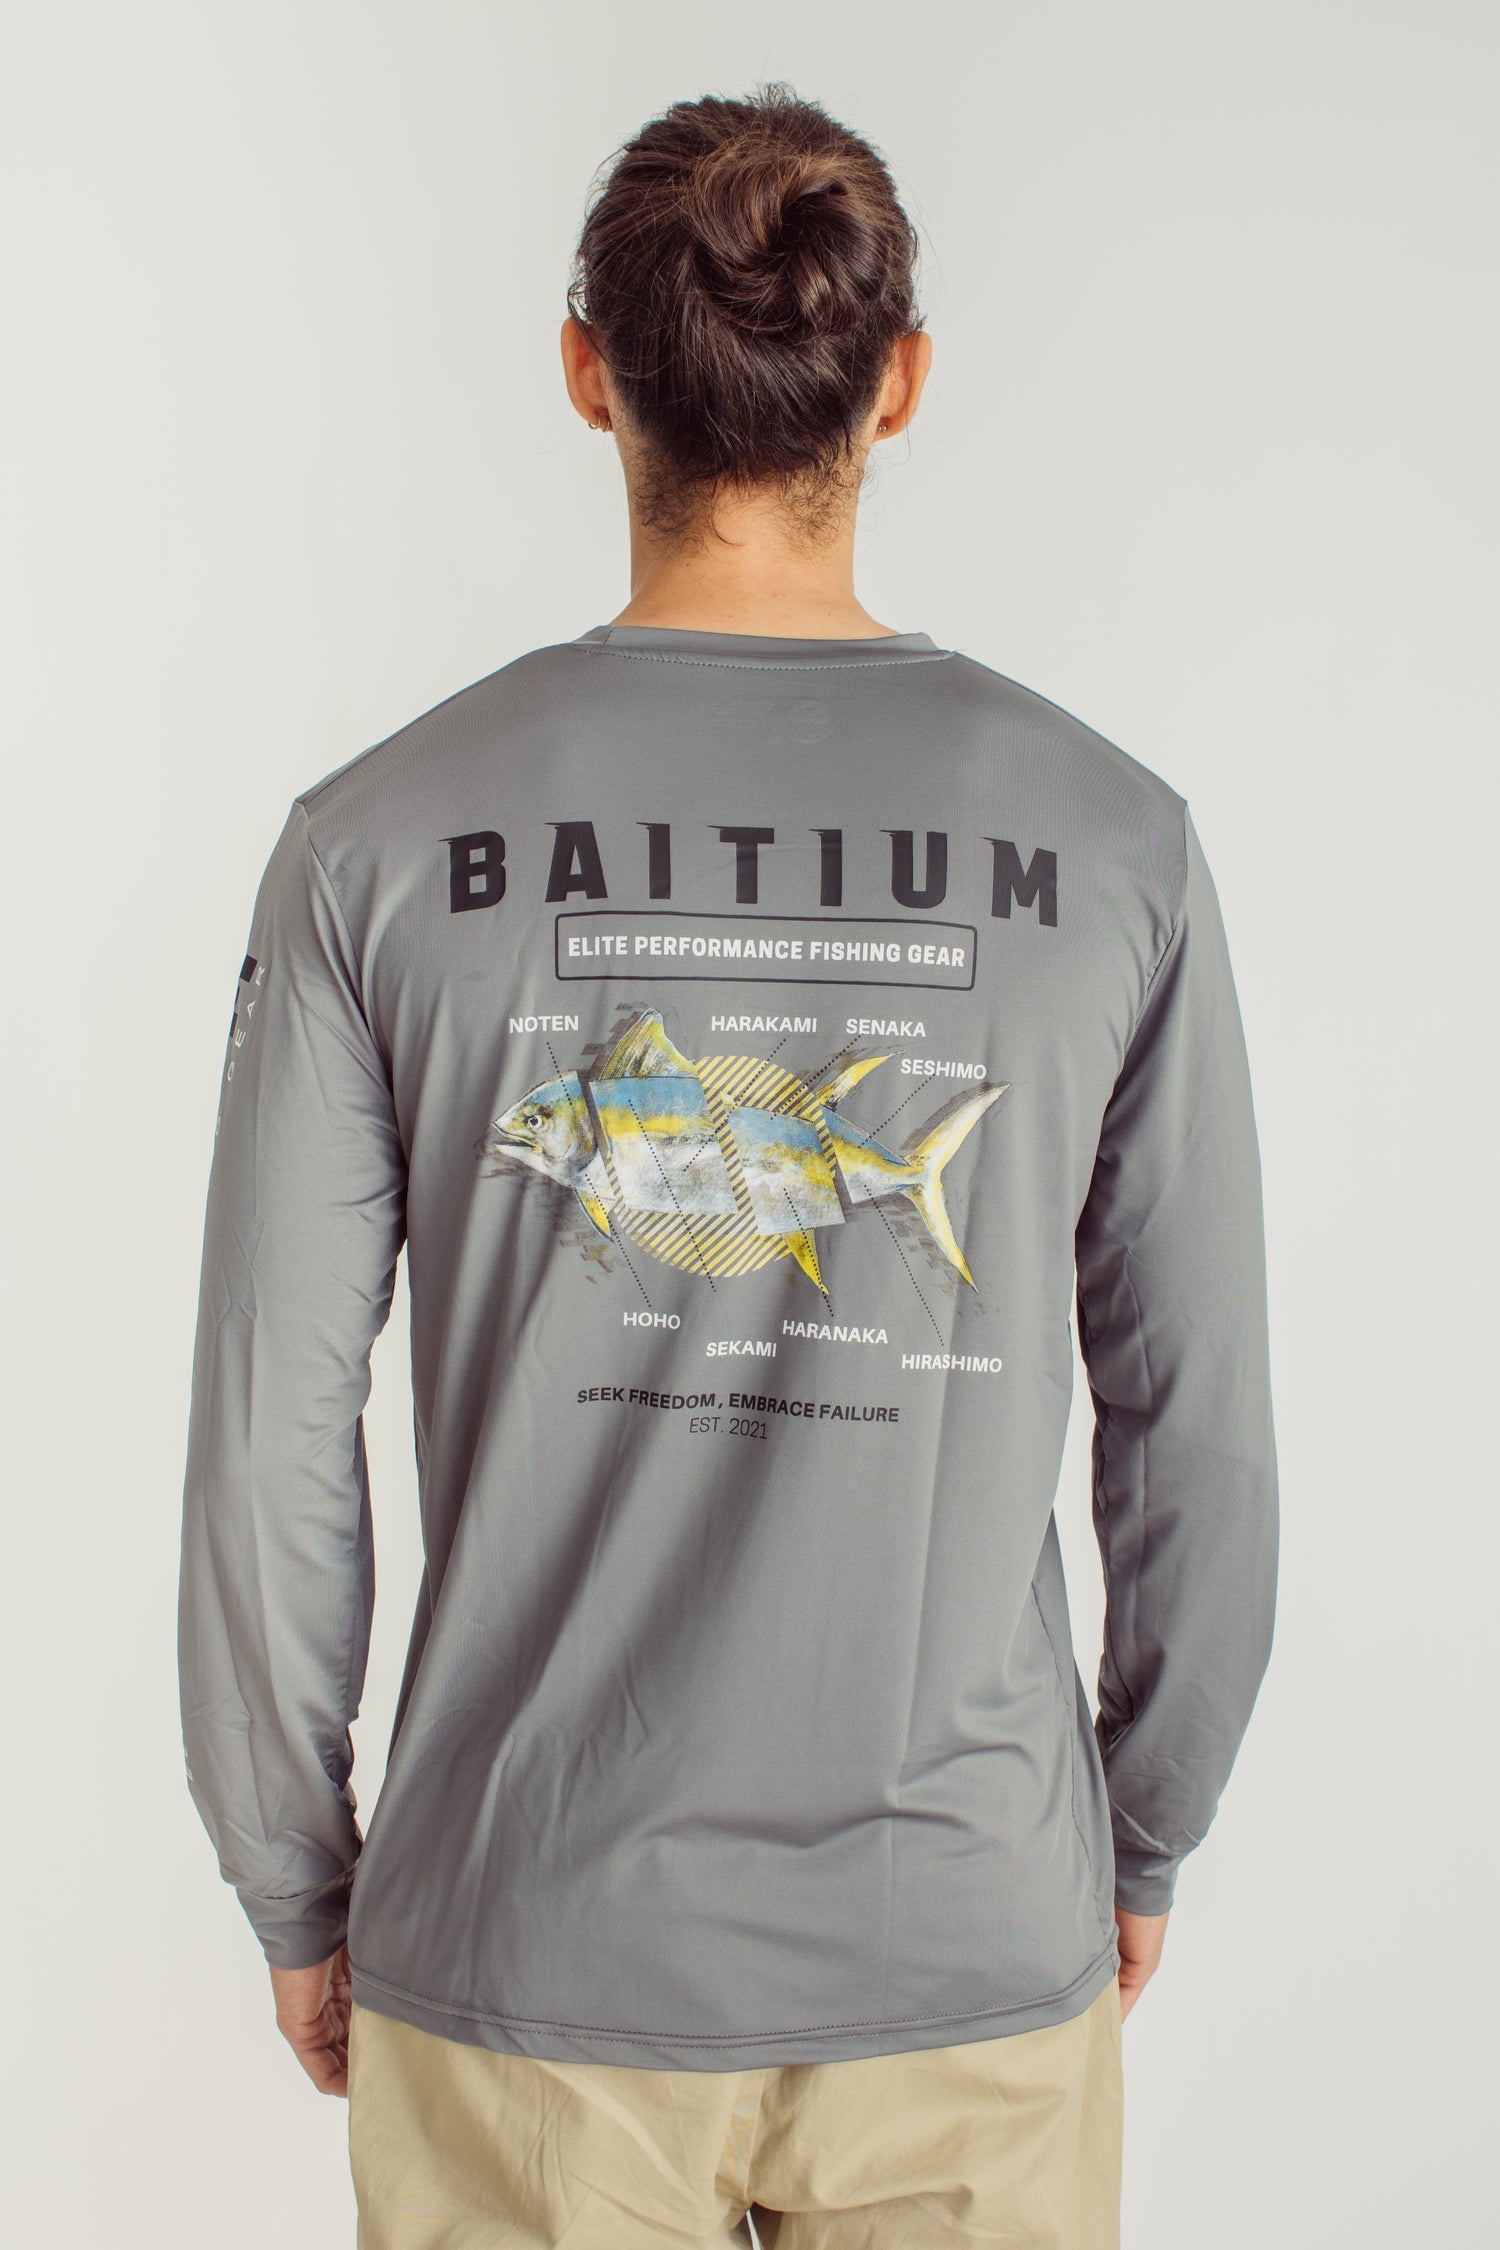 Baitium Performance Fishing Gear - Deconstructed Series